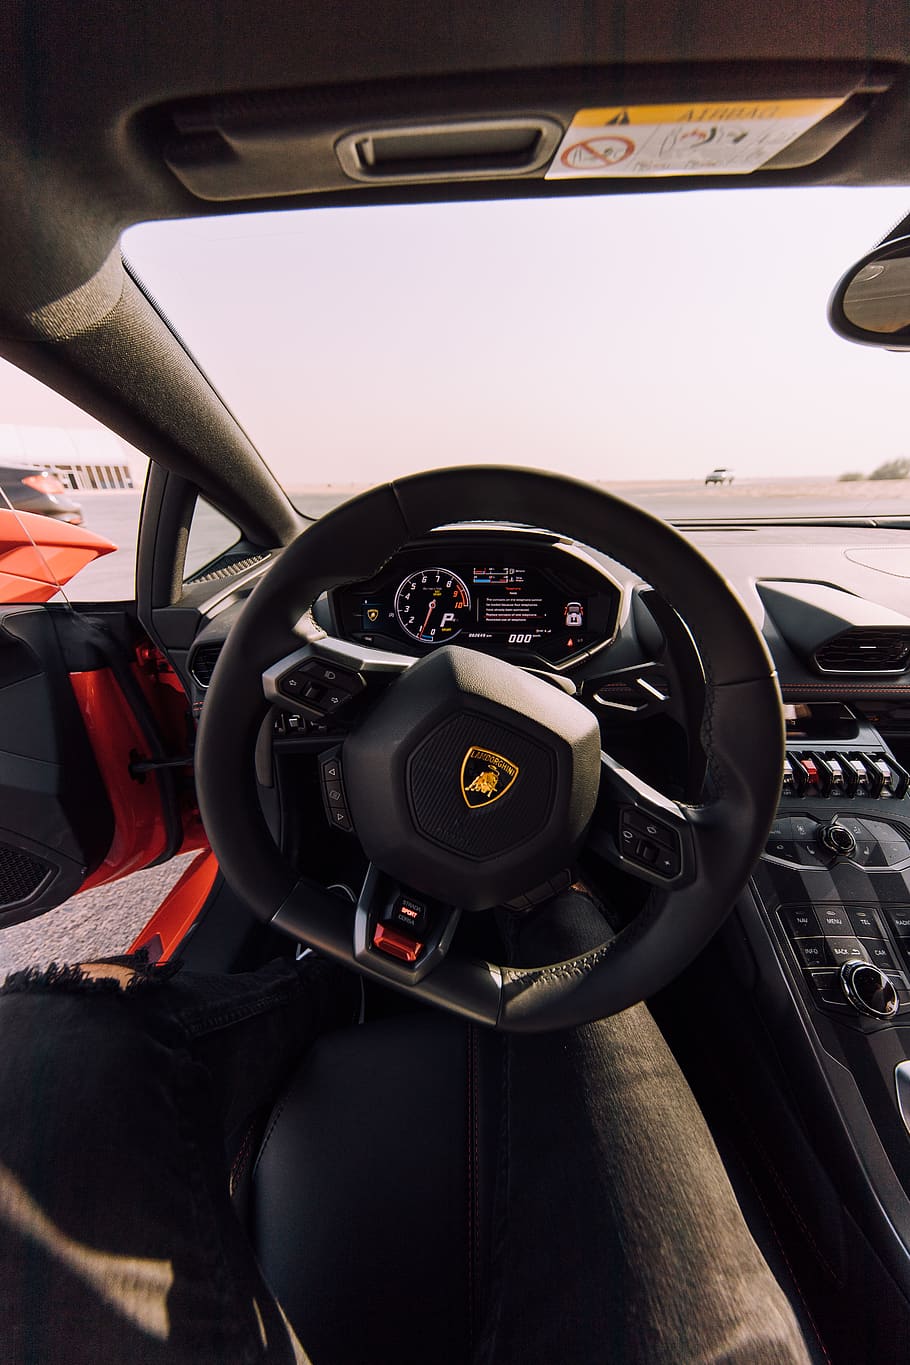 HD wallpaper: black Lamborghini car steering wheel, mode of